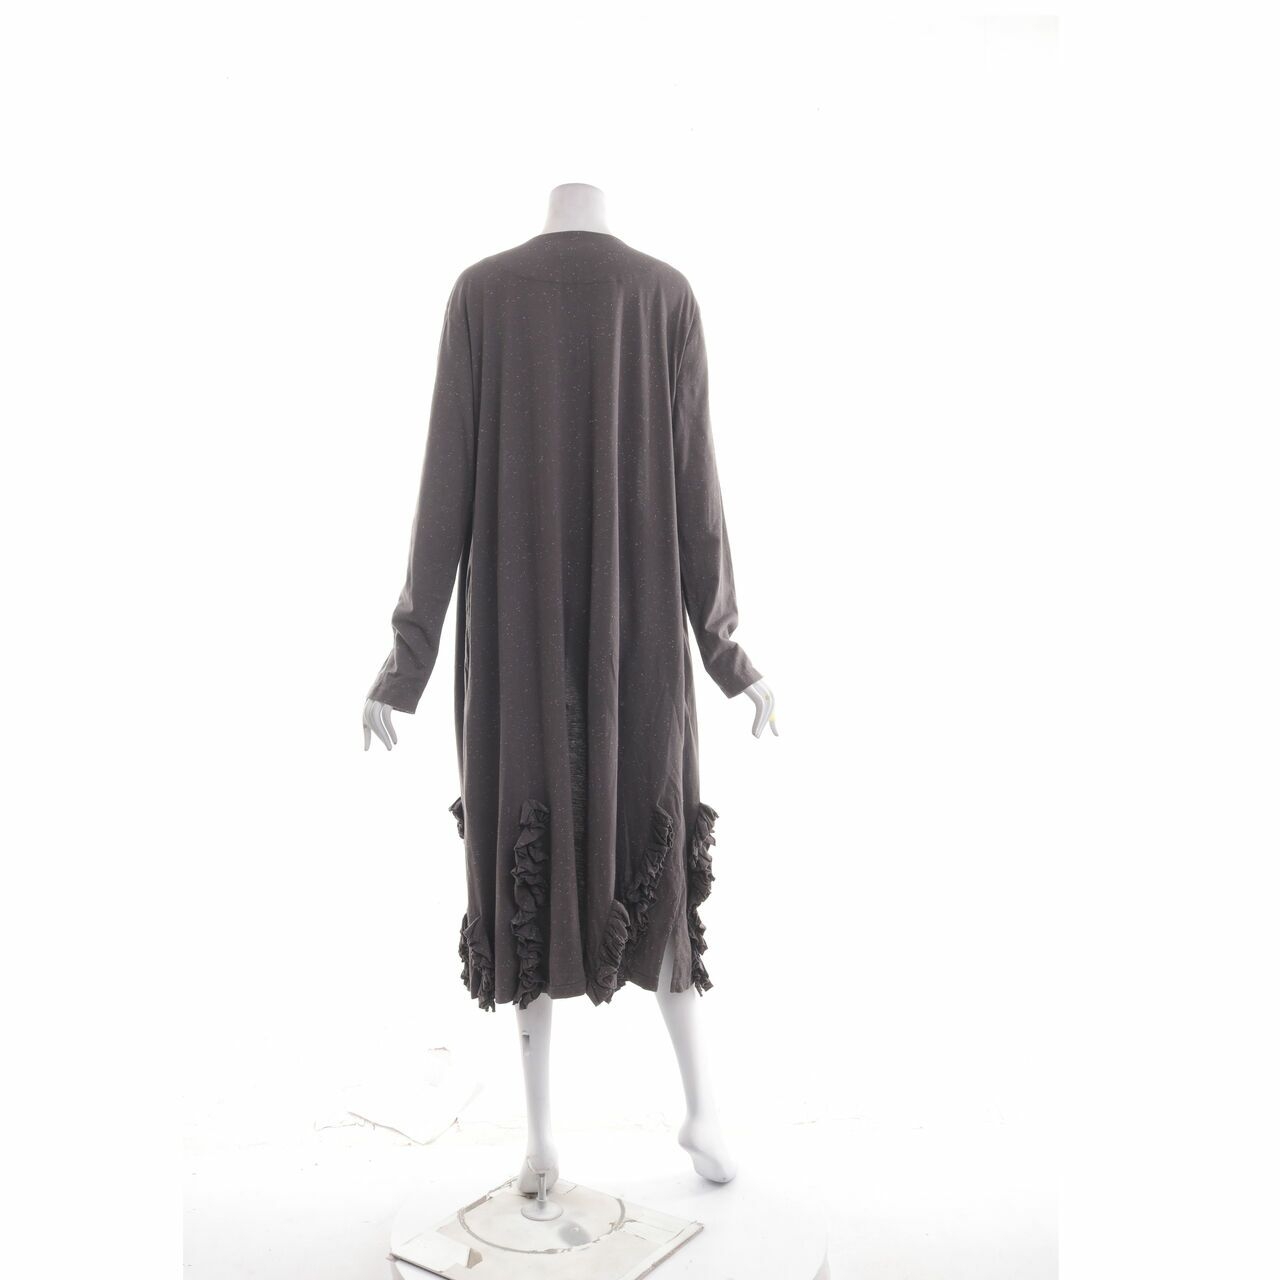 Rashawl by Renni Andriani Grey Kimono Outerwear